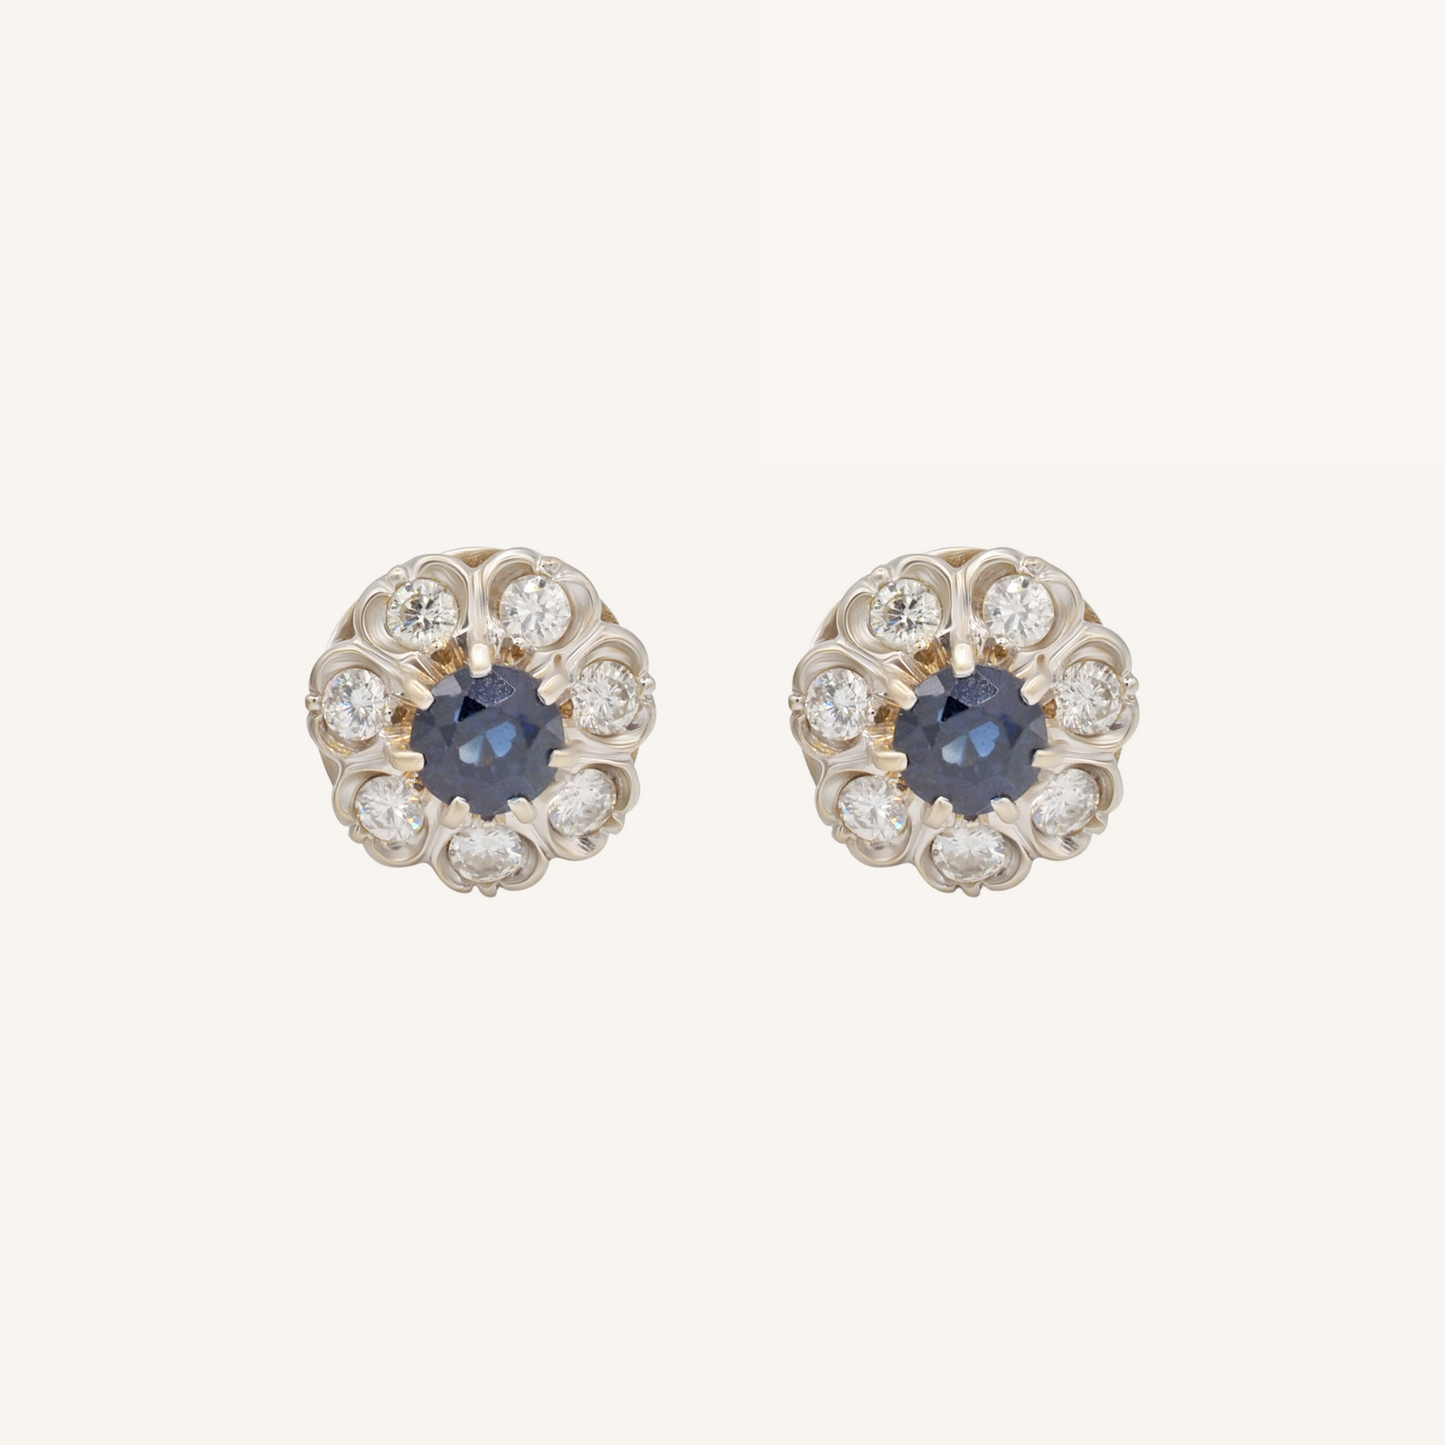 Round sapphire diamond earrings